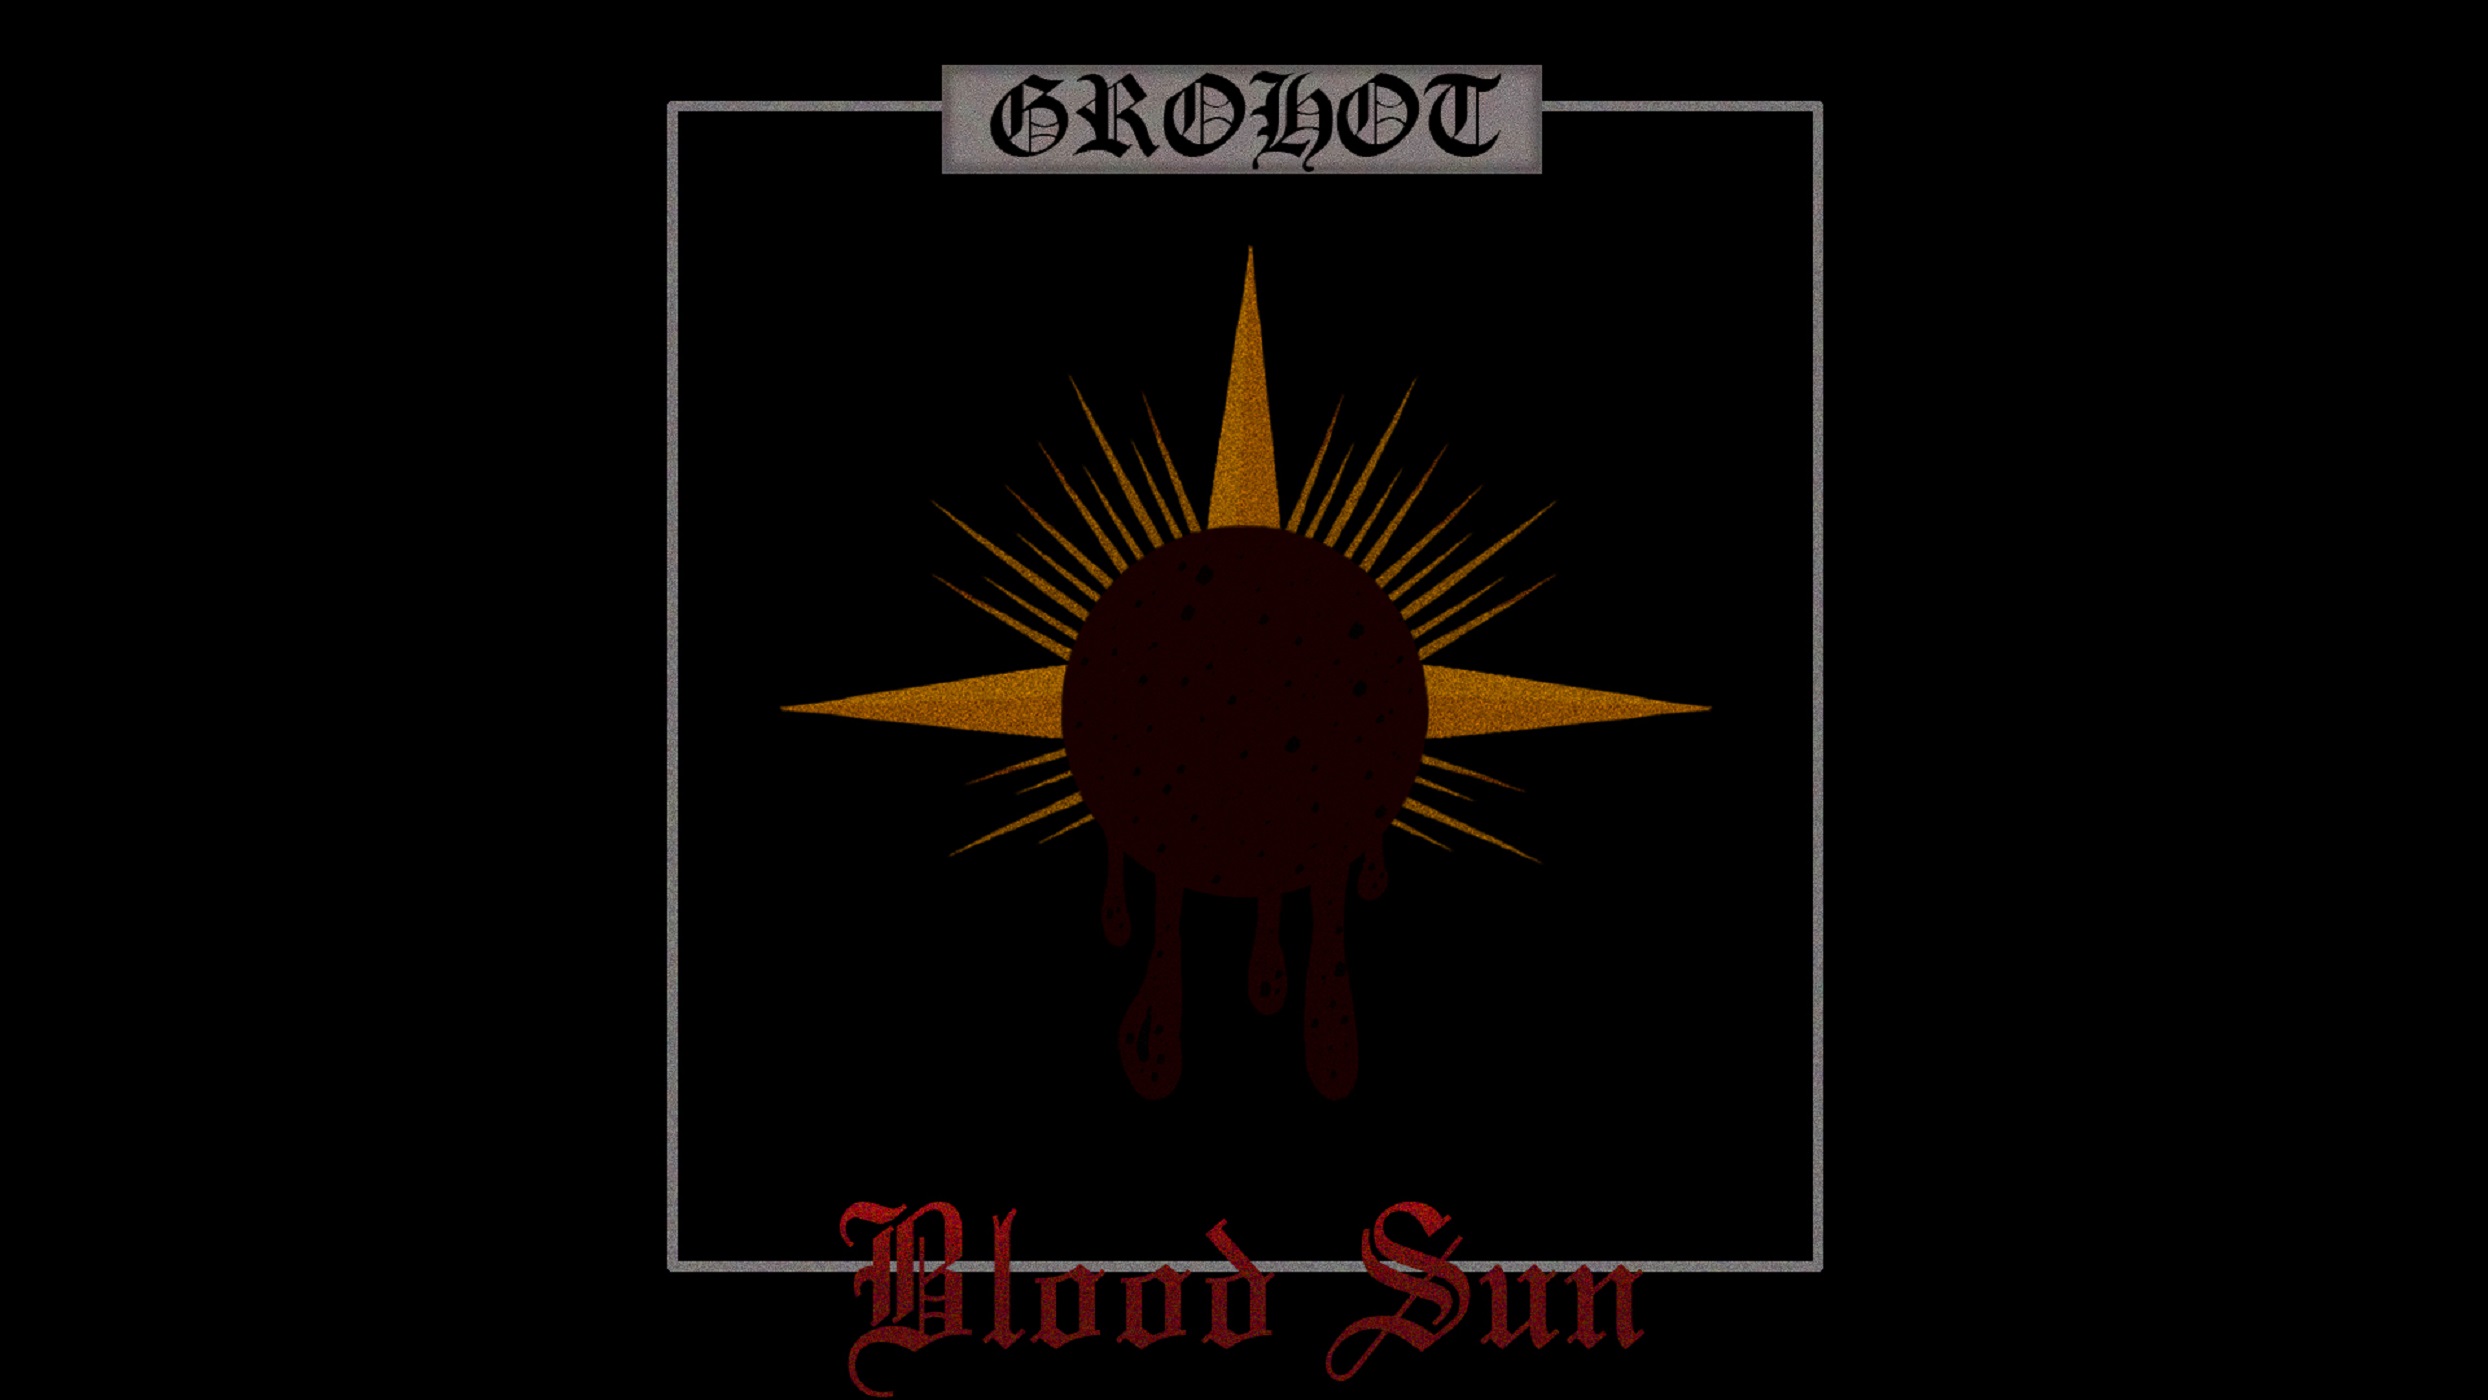 Grohot lanseaza single-ul “Blood Sun” - Contemporary-Establishment